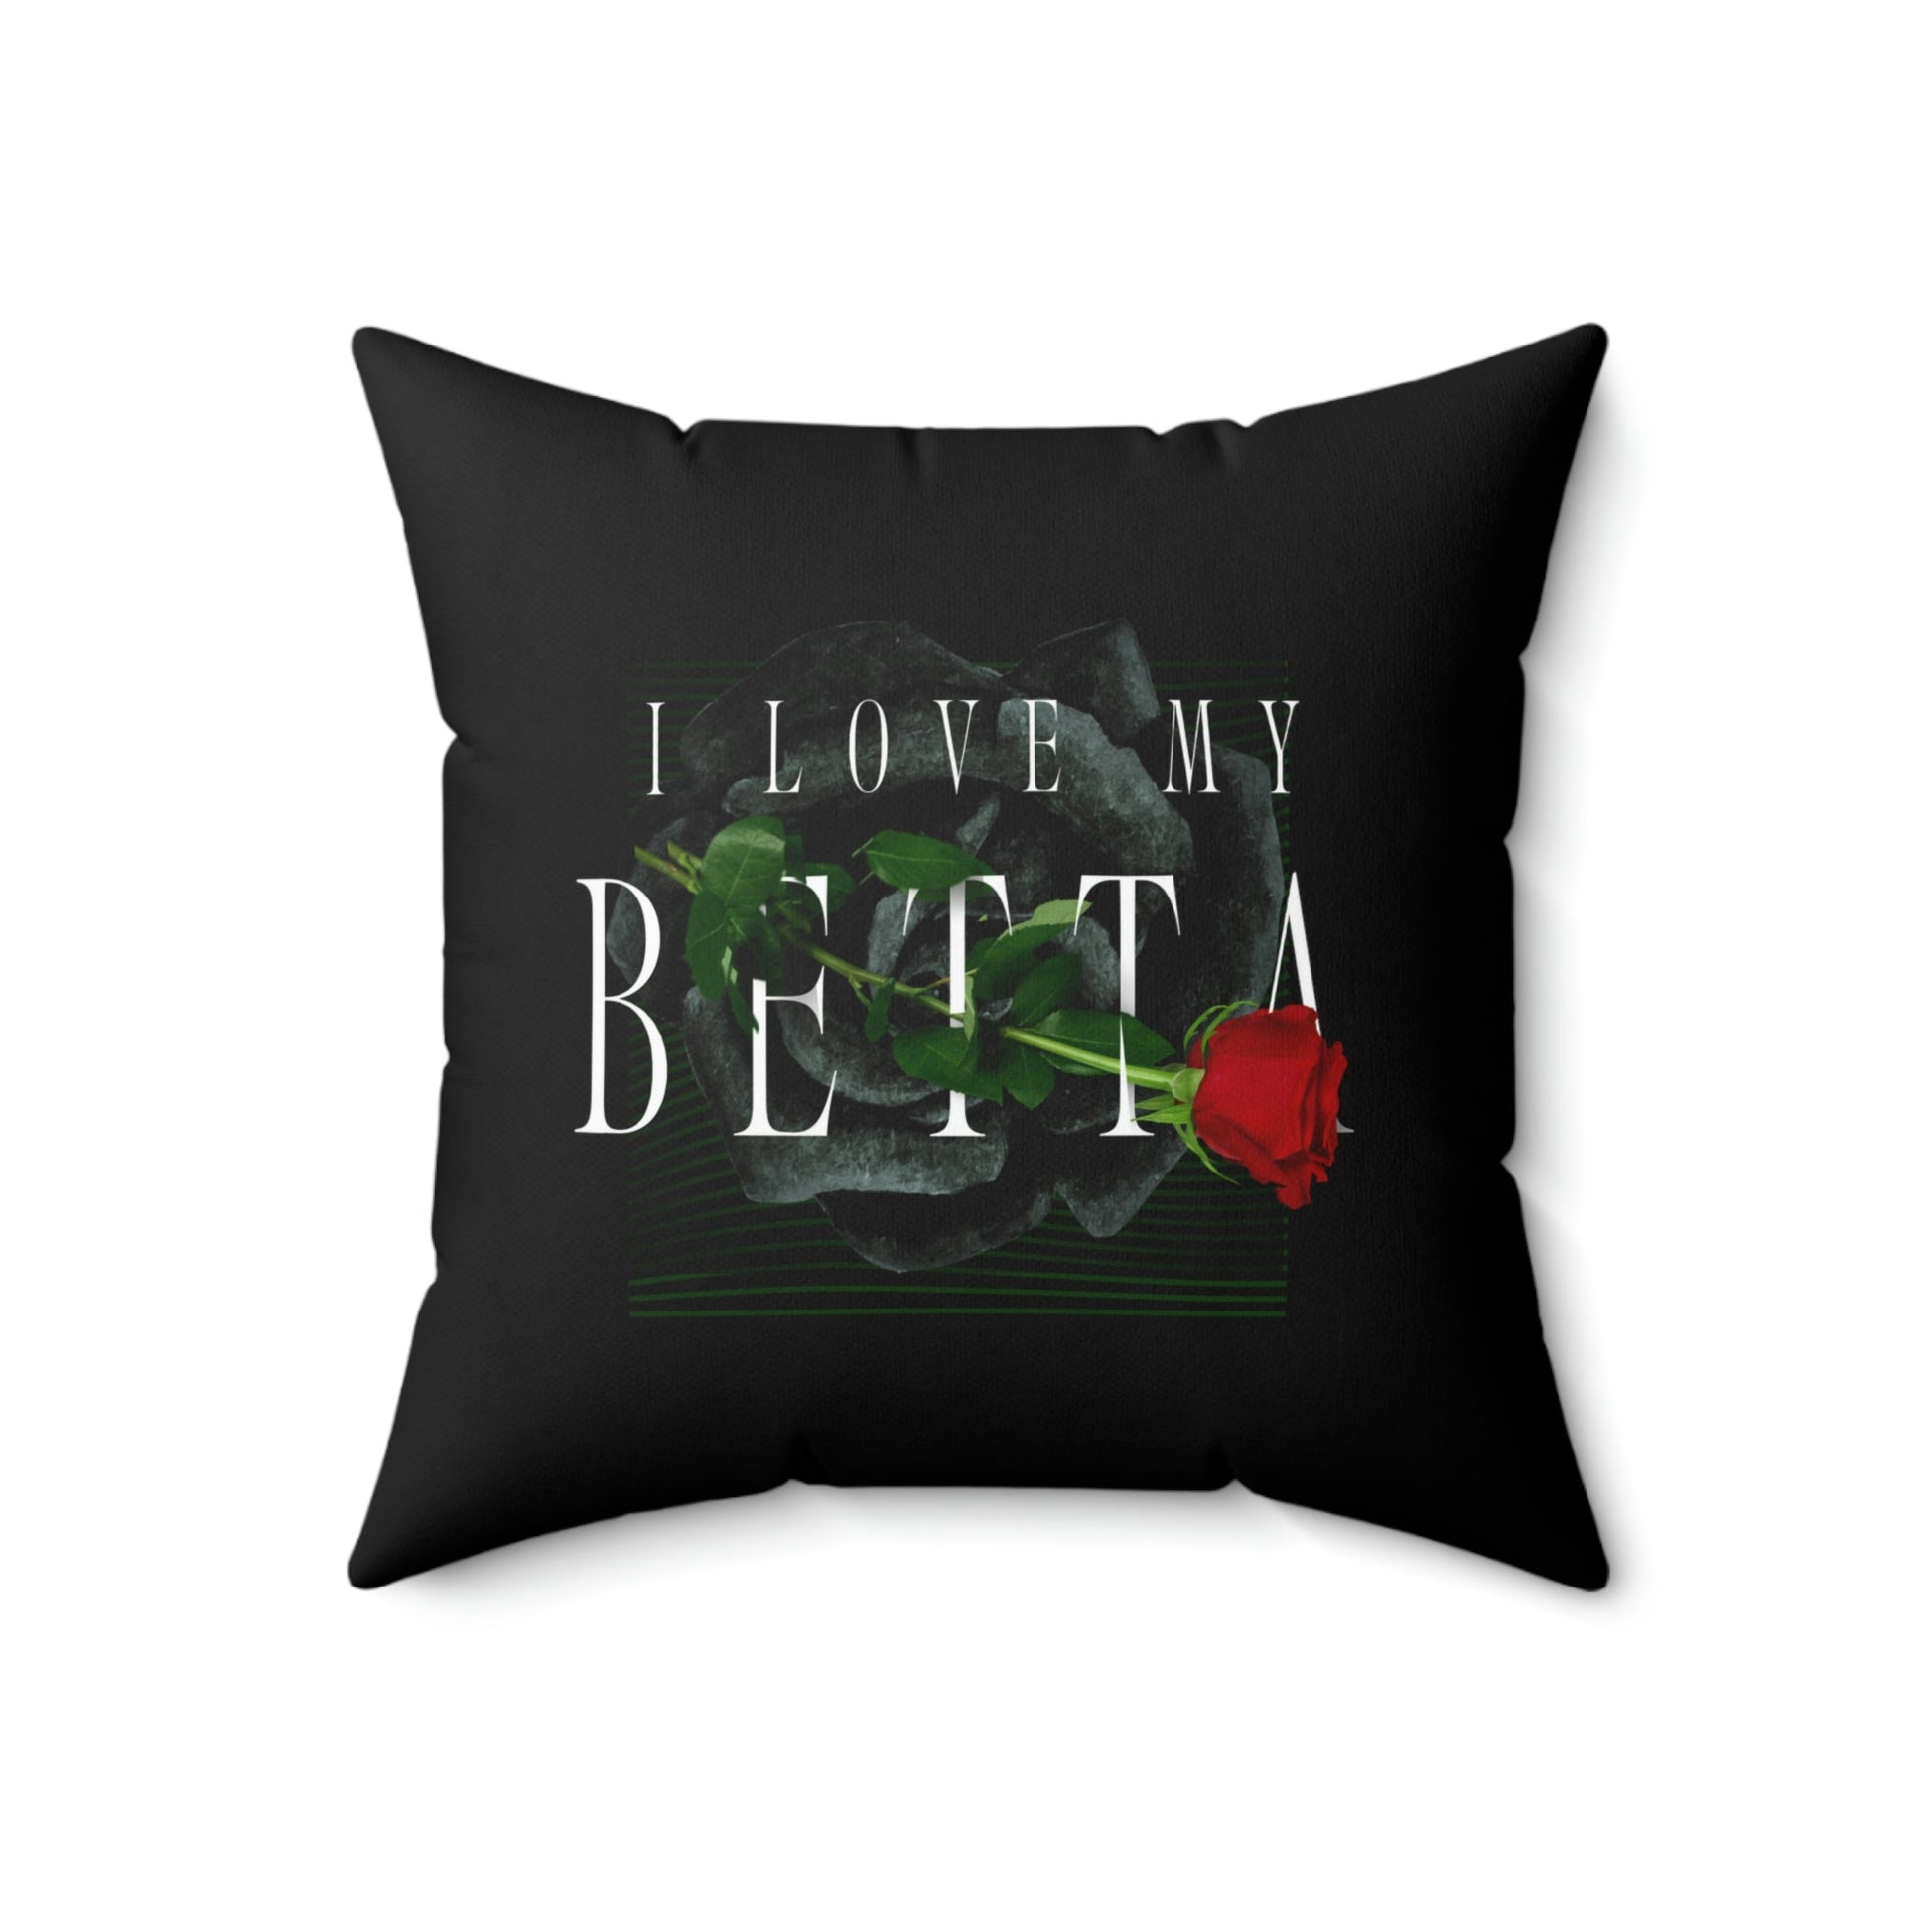 Love My Betta Square Pillow